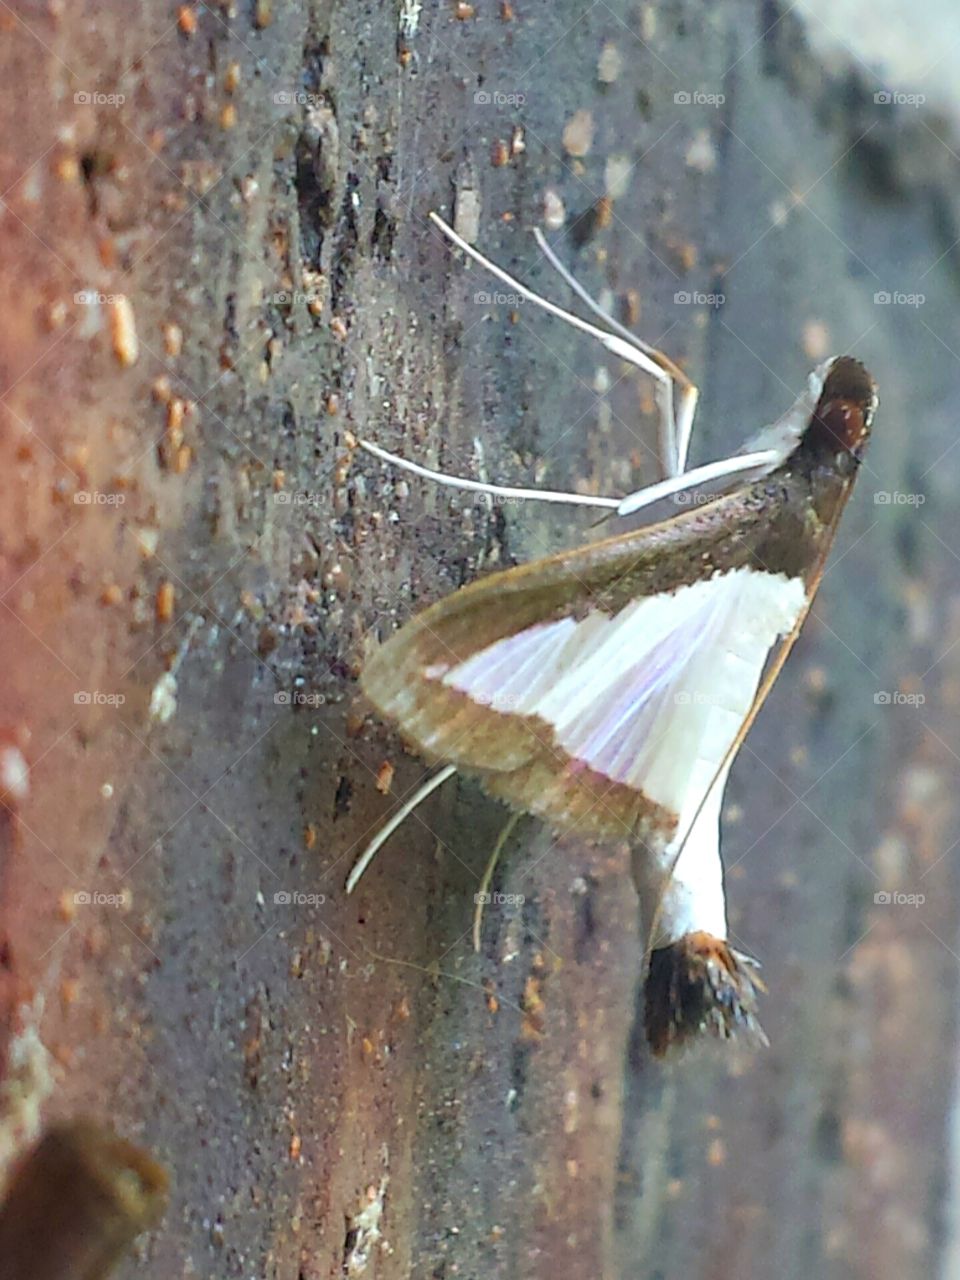 Journey Moth